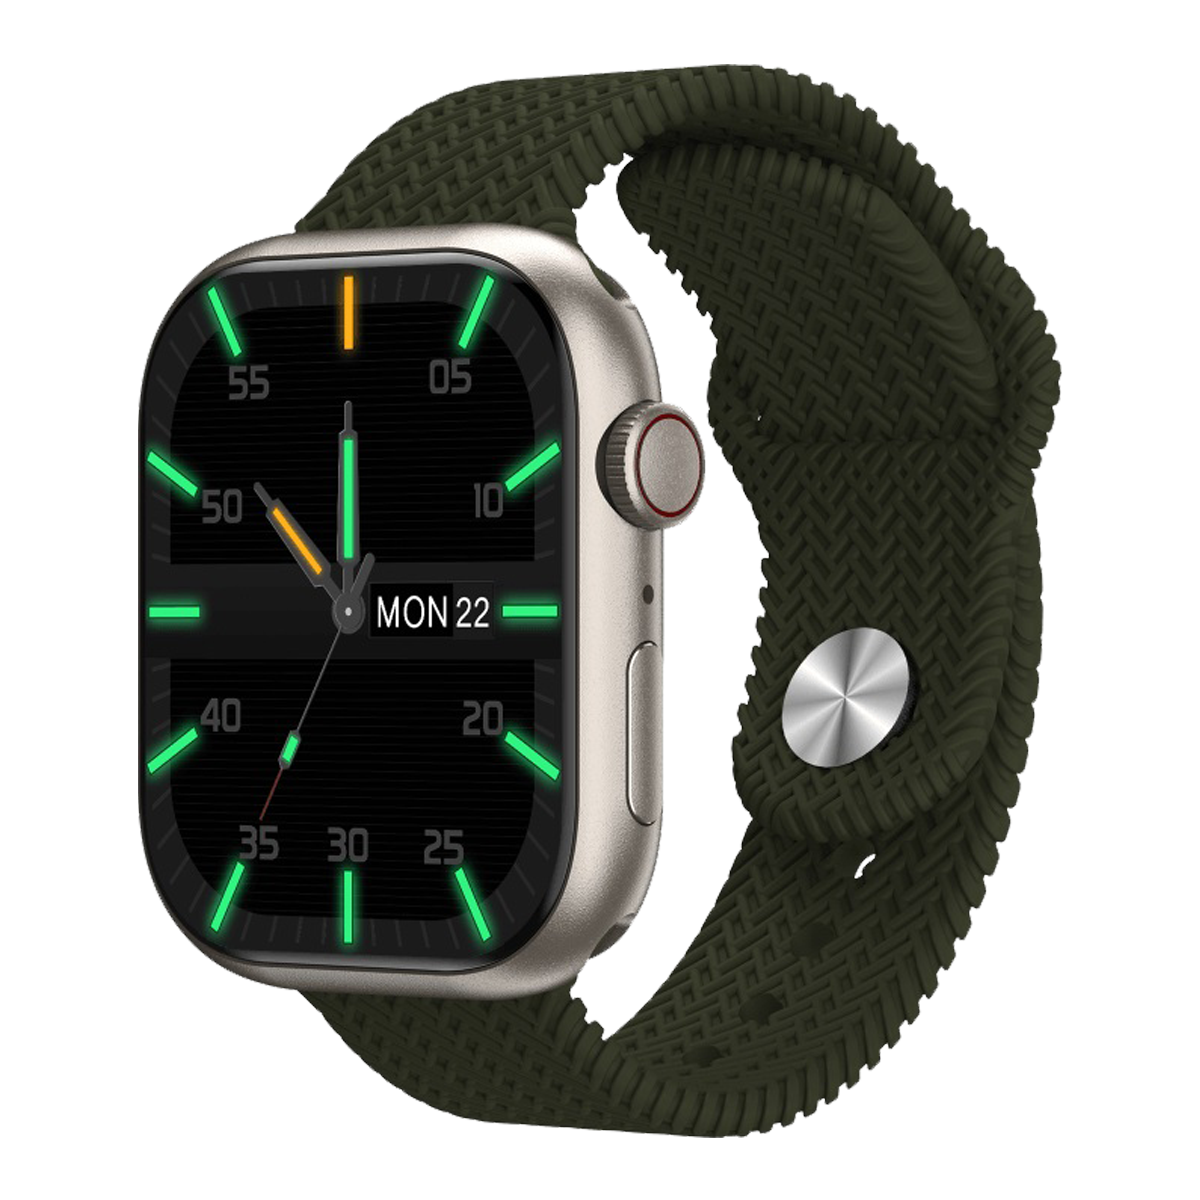 HK9 PRO MAX True Amoled Smartwatch (Green)